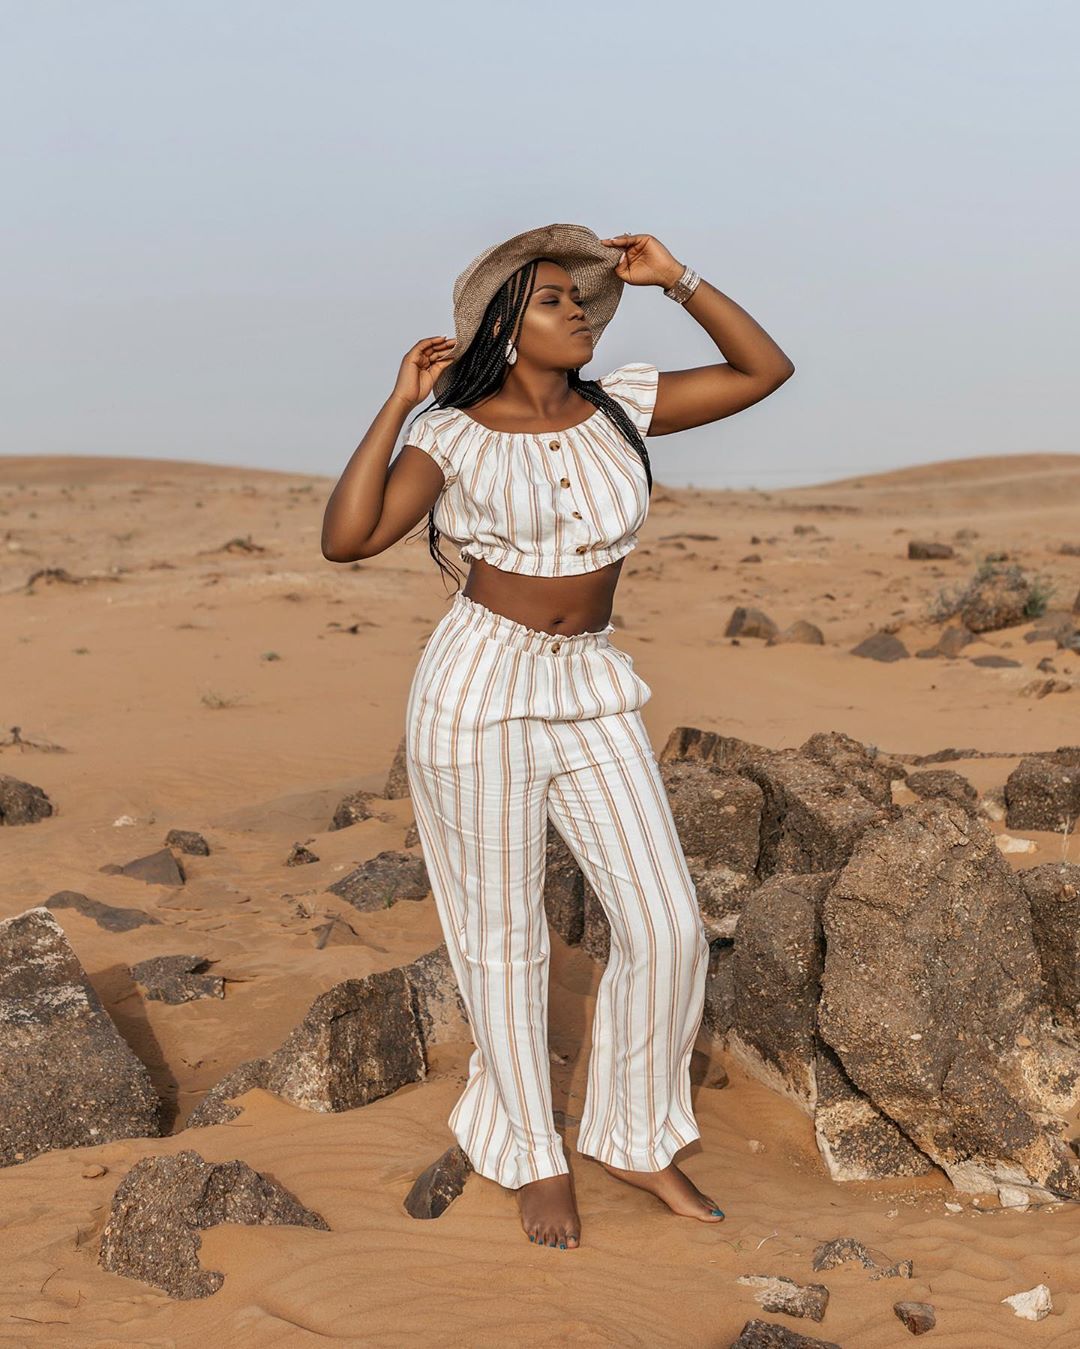 Desert women photo shoot in UAE